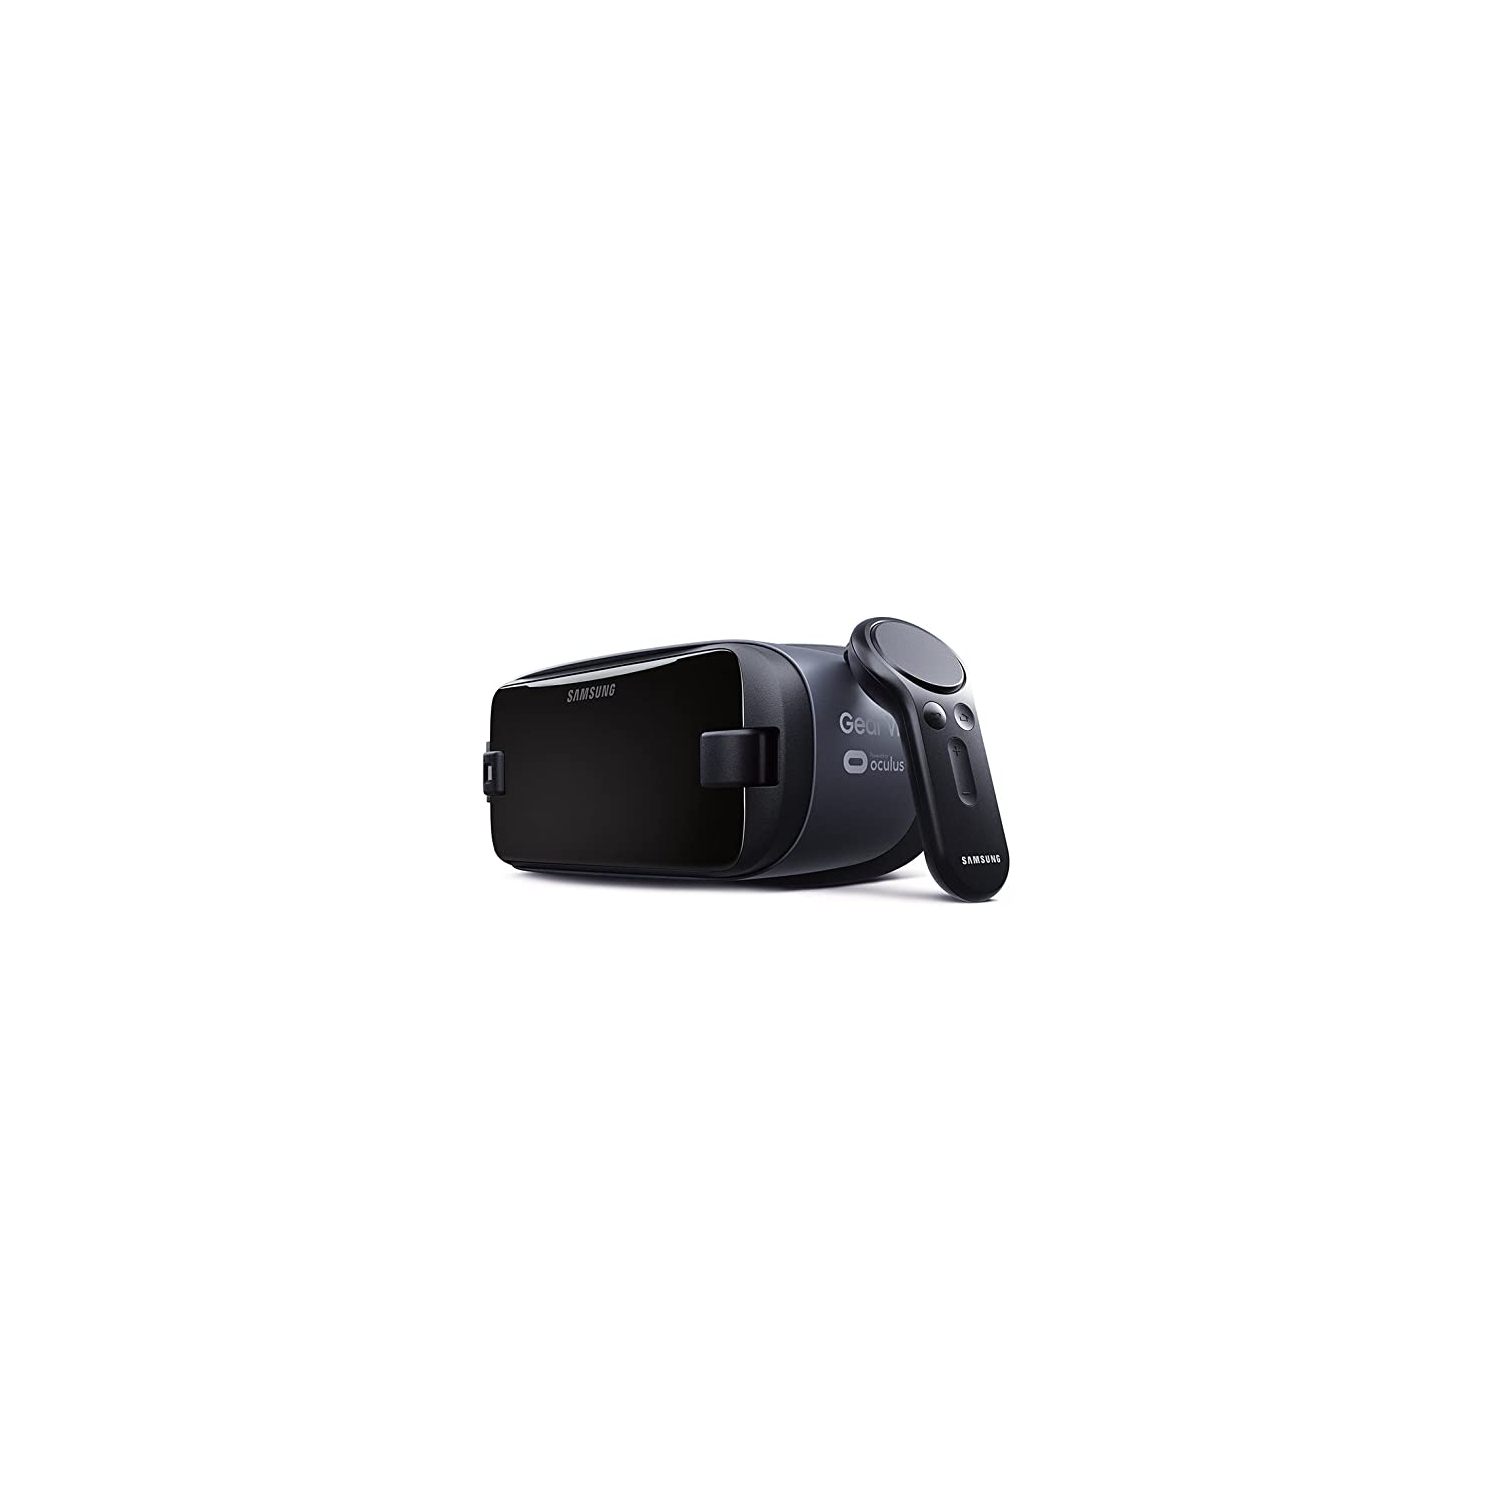 Samsung Gear VR - Black - (SM-R324) - OPEN BOX